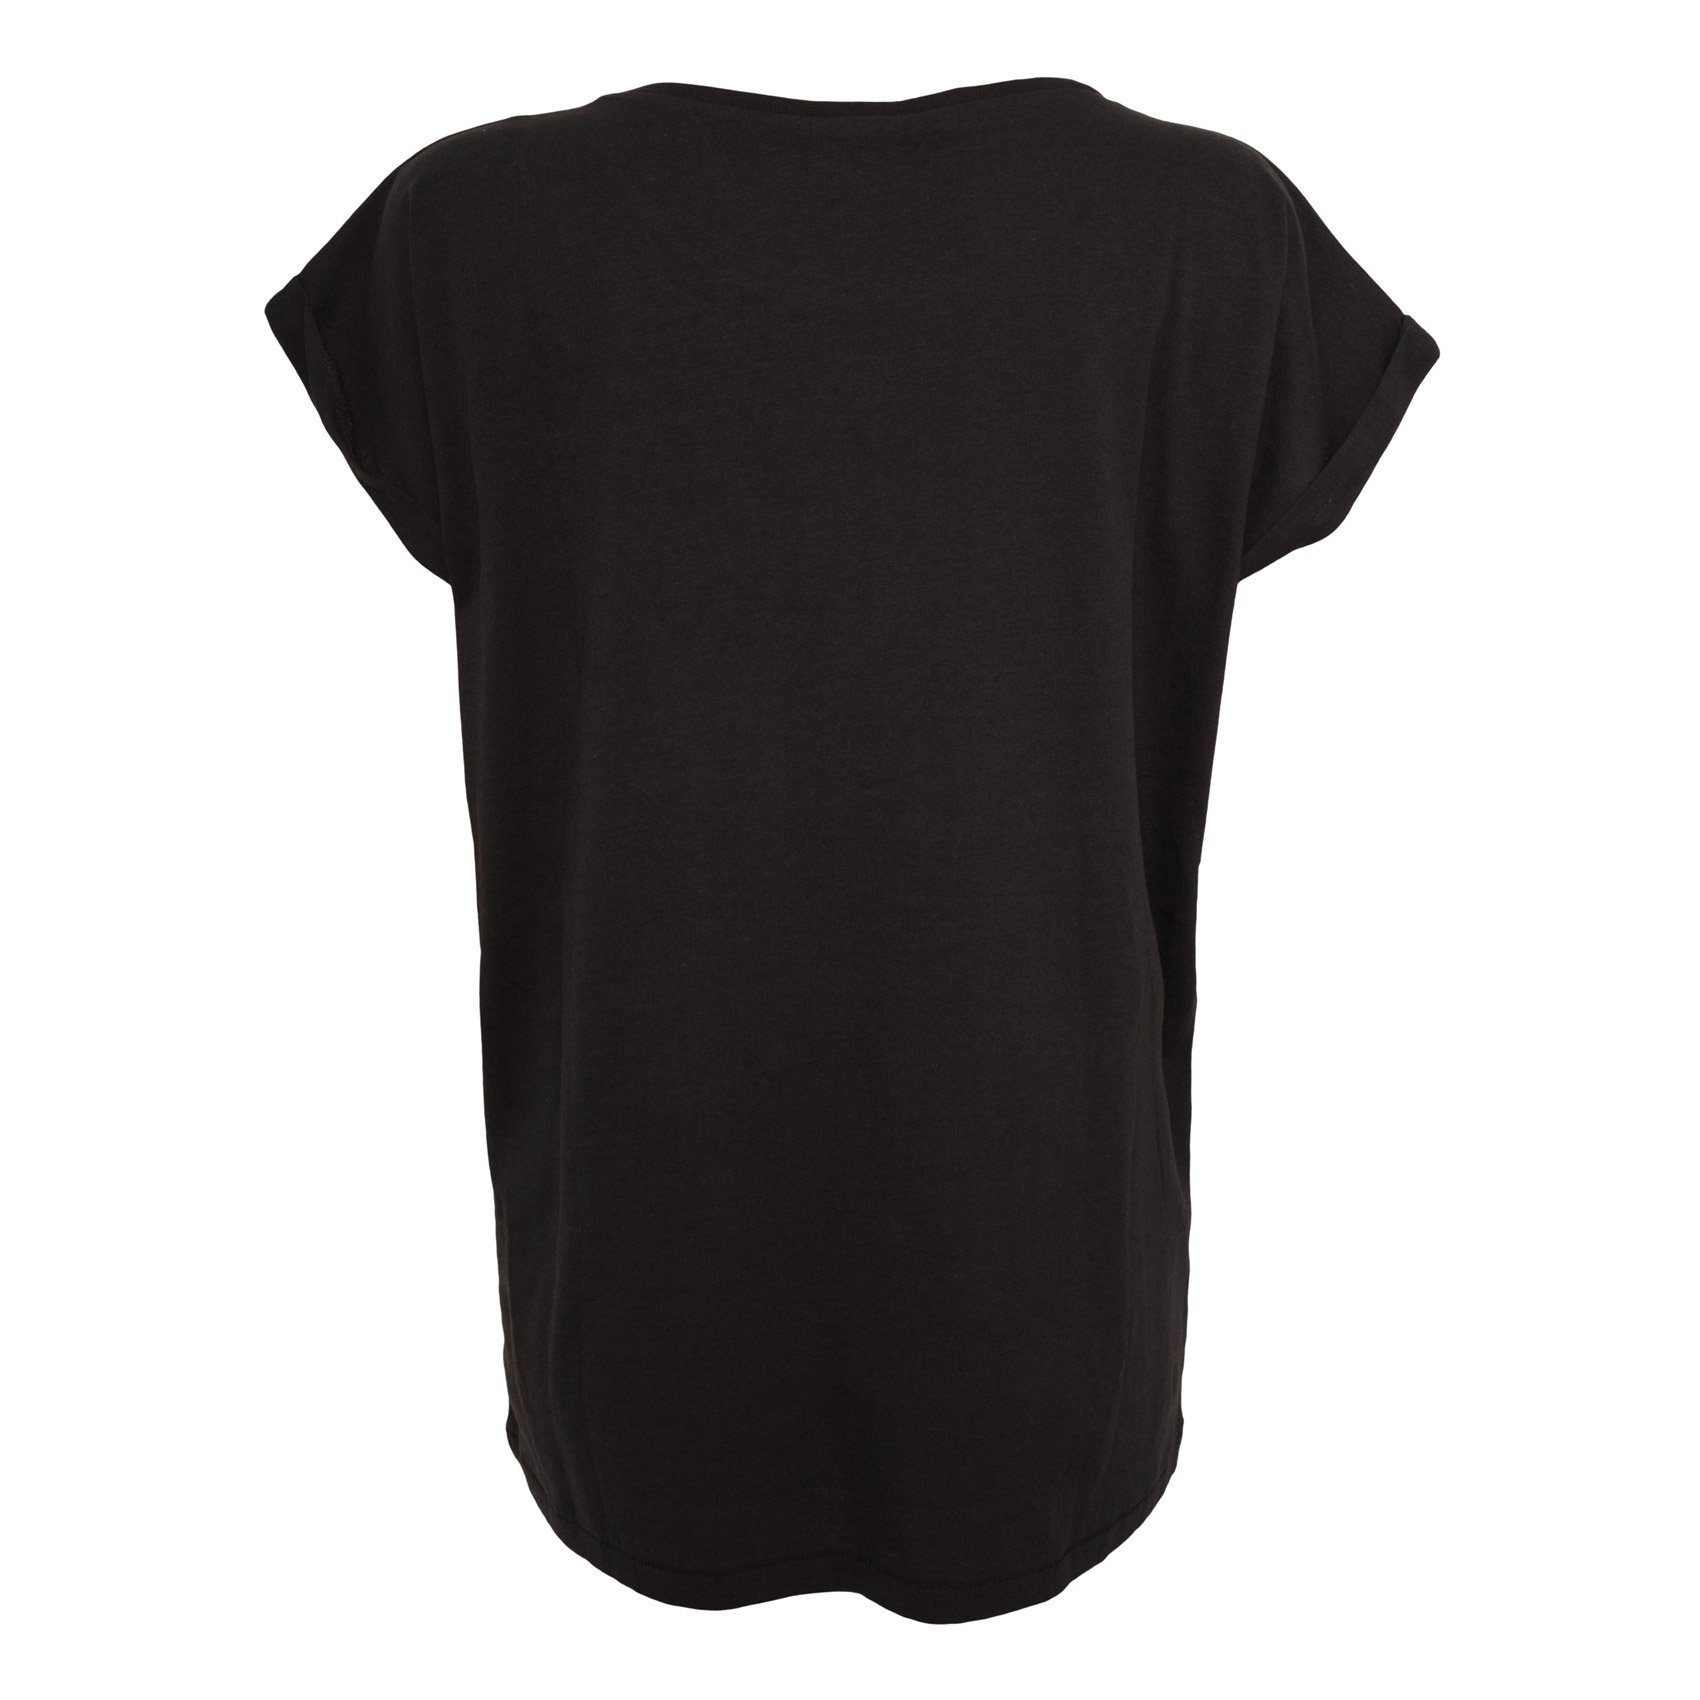 URBAN CLASSICS T-Shirt Ladies Extended black Shoulder Shoulder Extended - Tee TB771 black